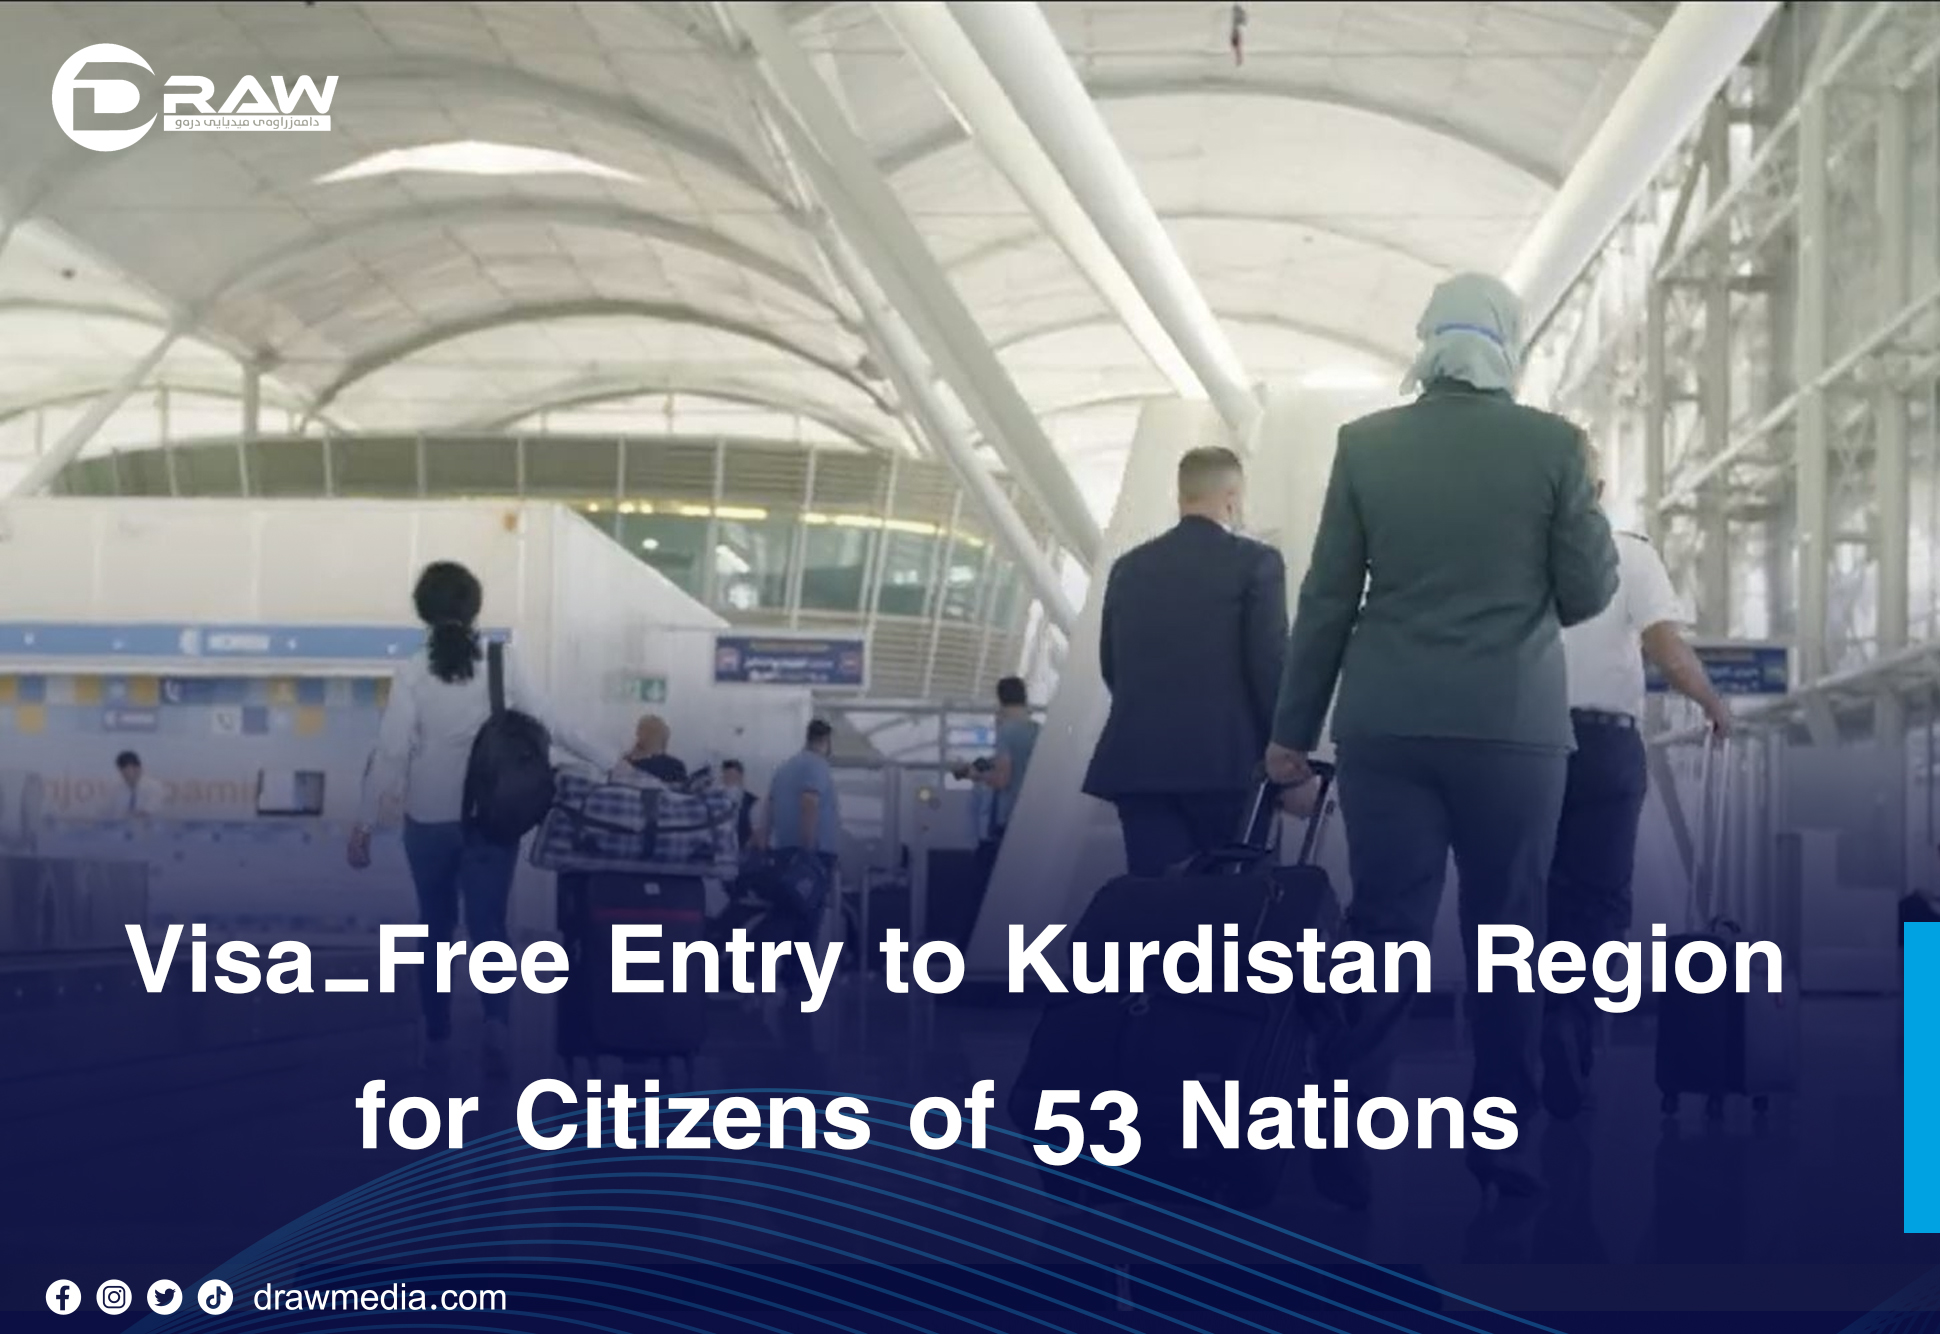 DrawMedia.net / Visa-Free Entry to Kurdistan Region for Citizens of 53 Nations